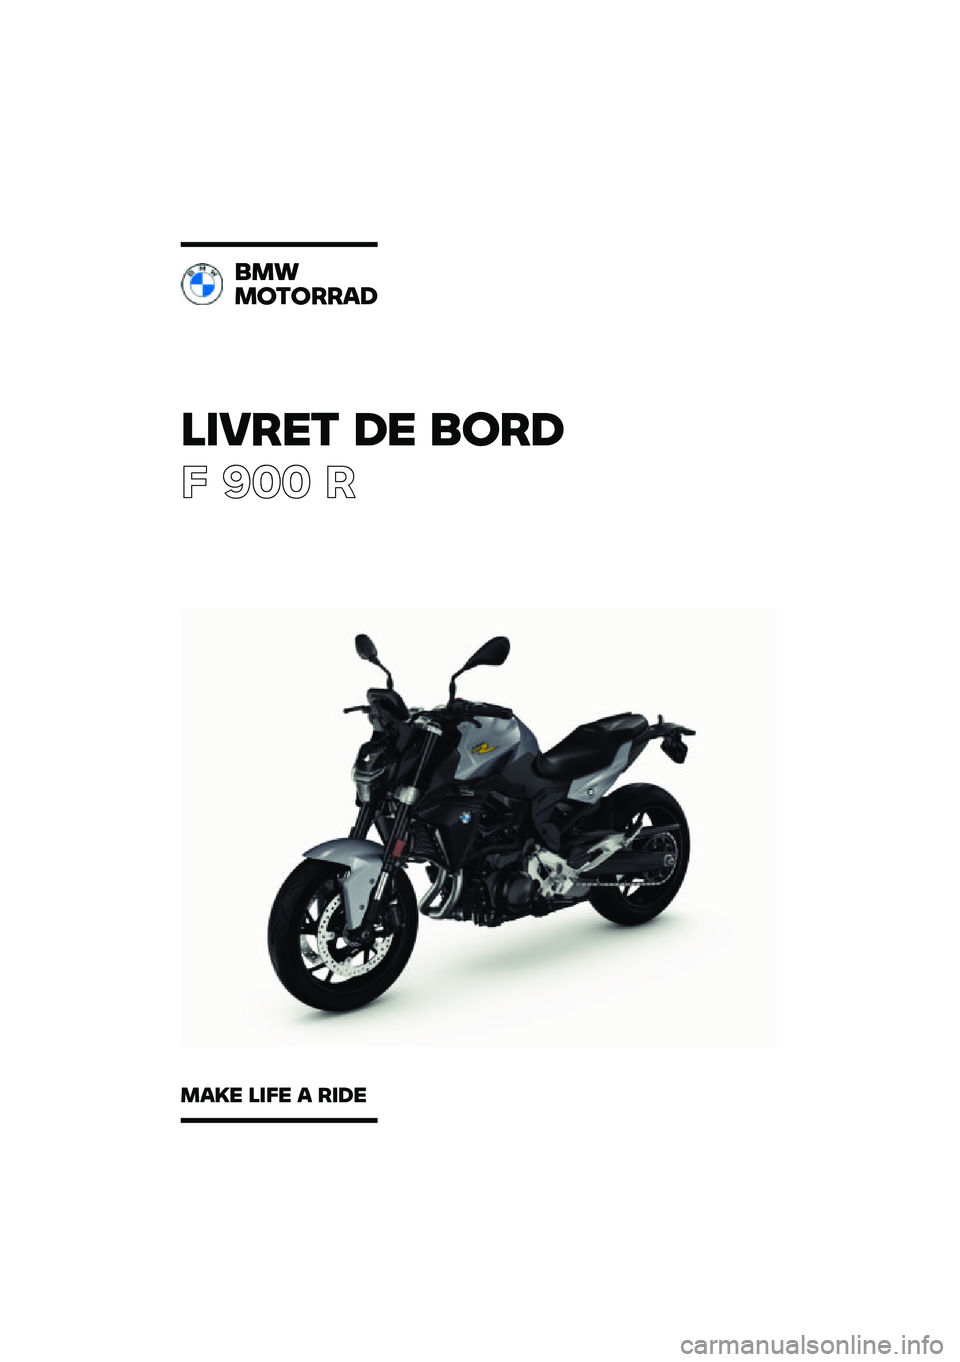 BMW MOTORRAD F 900 R 2021  Livret de bord (in French) ������ �\b� �	�
��\b
� ��� �
�	��\f
��
��
���
�\b
��
�� ���� �
 ���\b� 